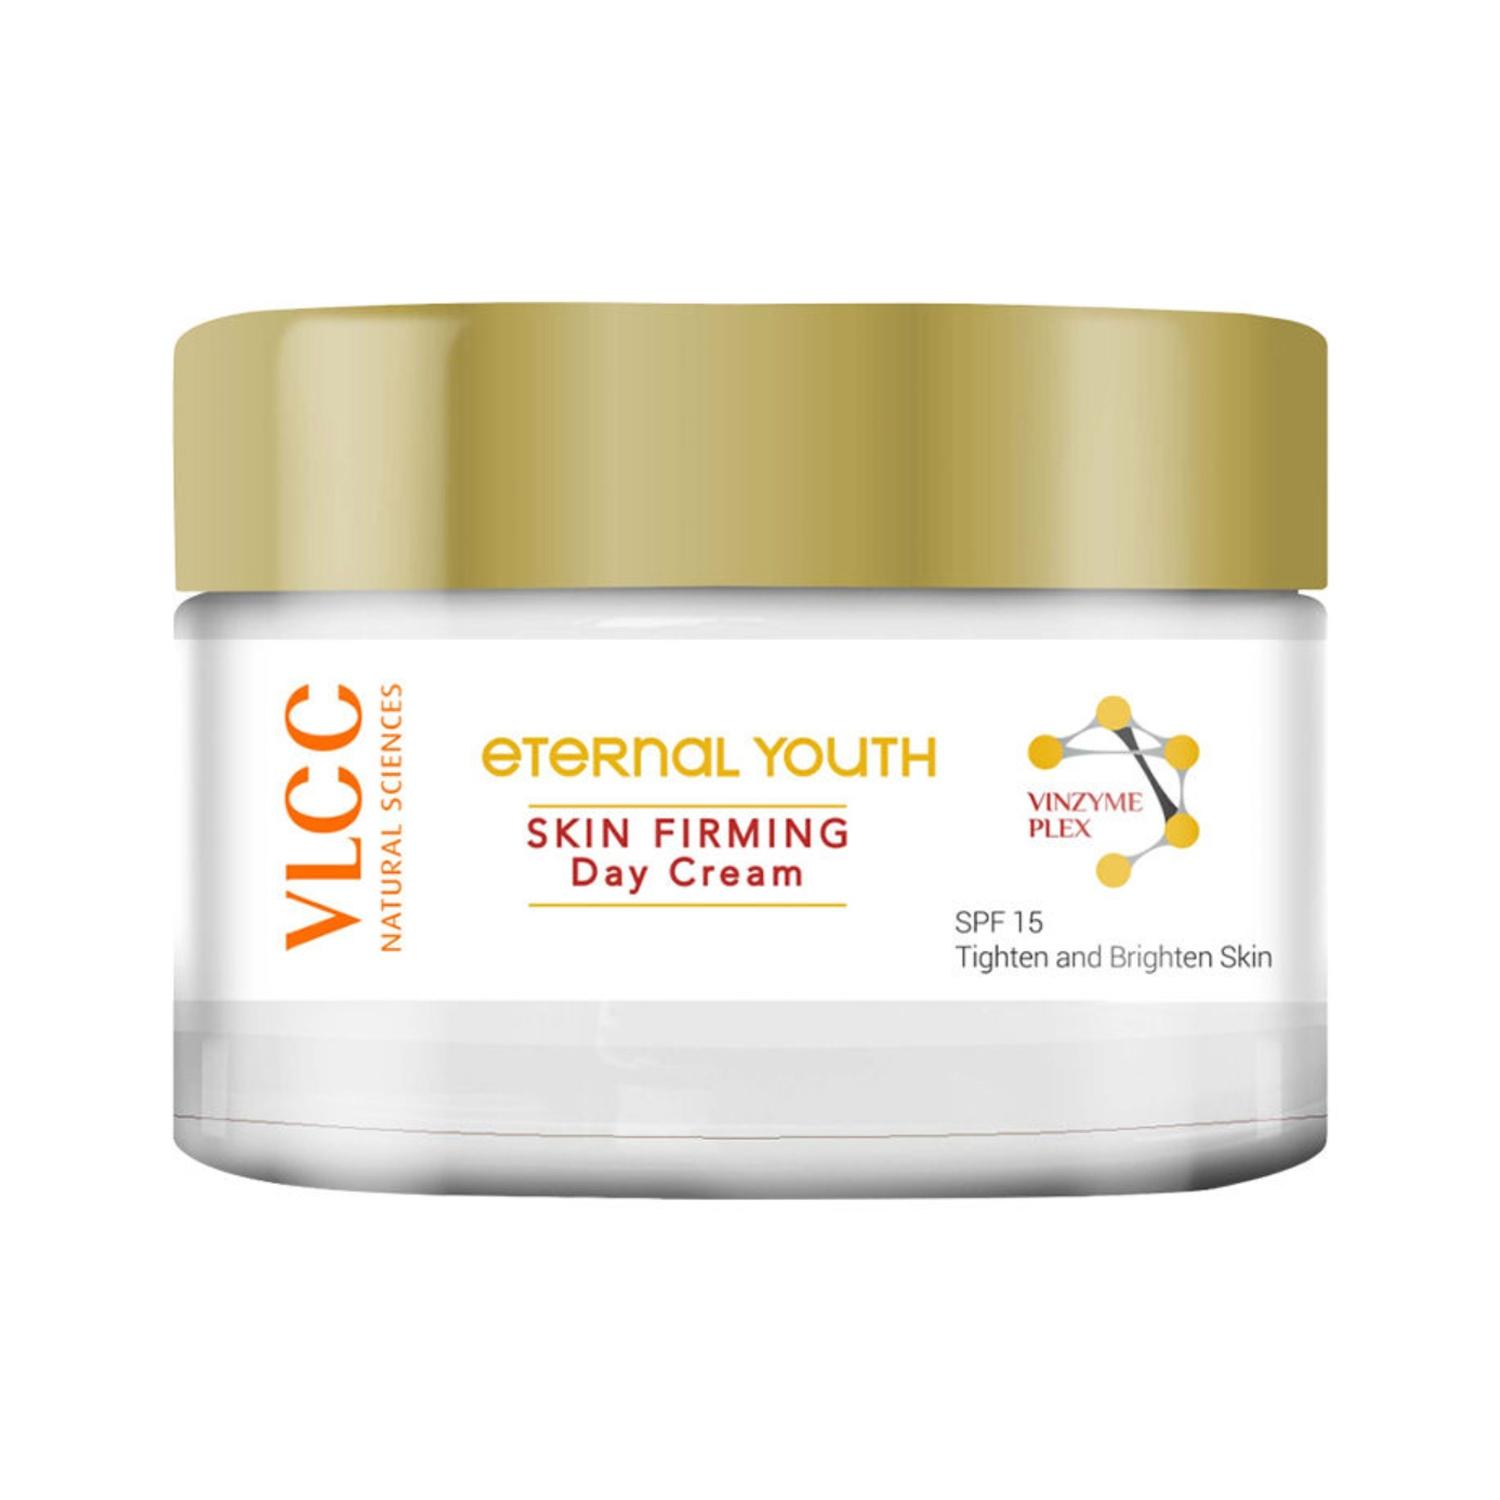 vlcc eternal youth skin firming day cream (50g)